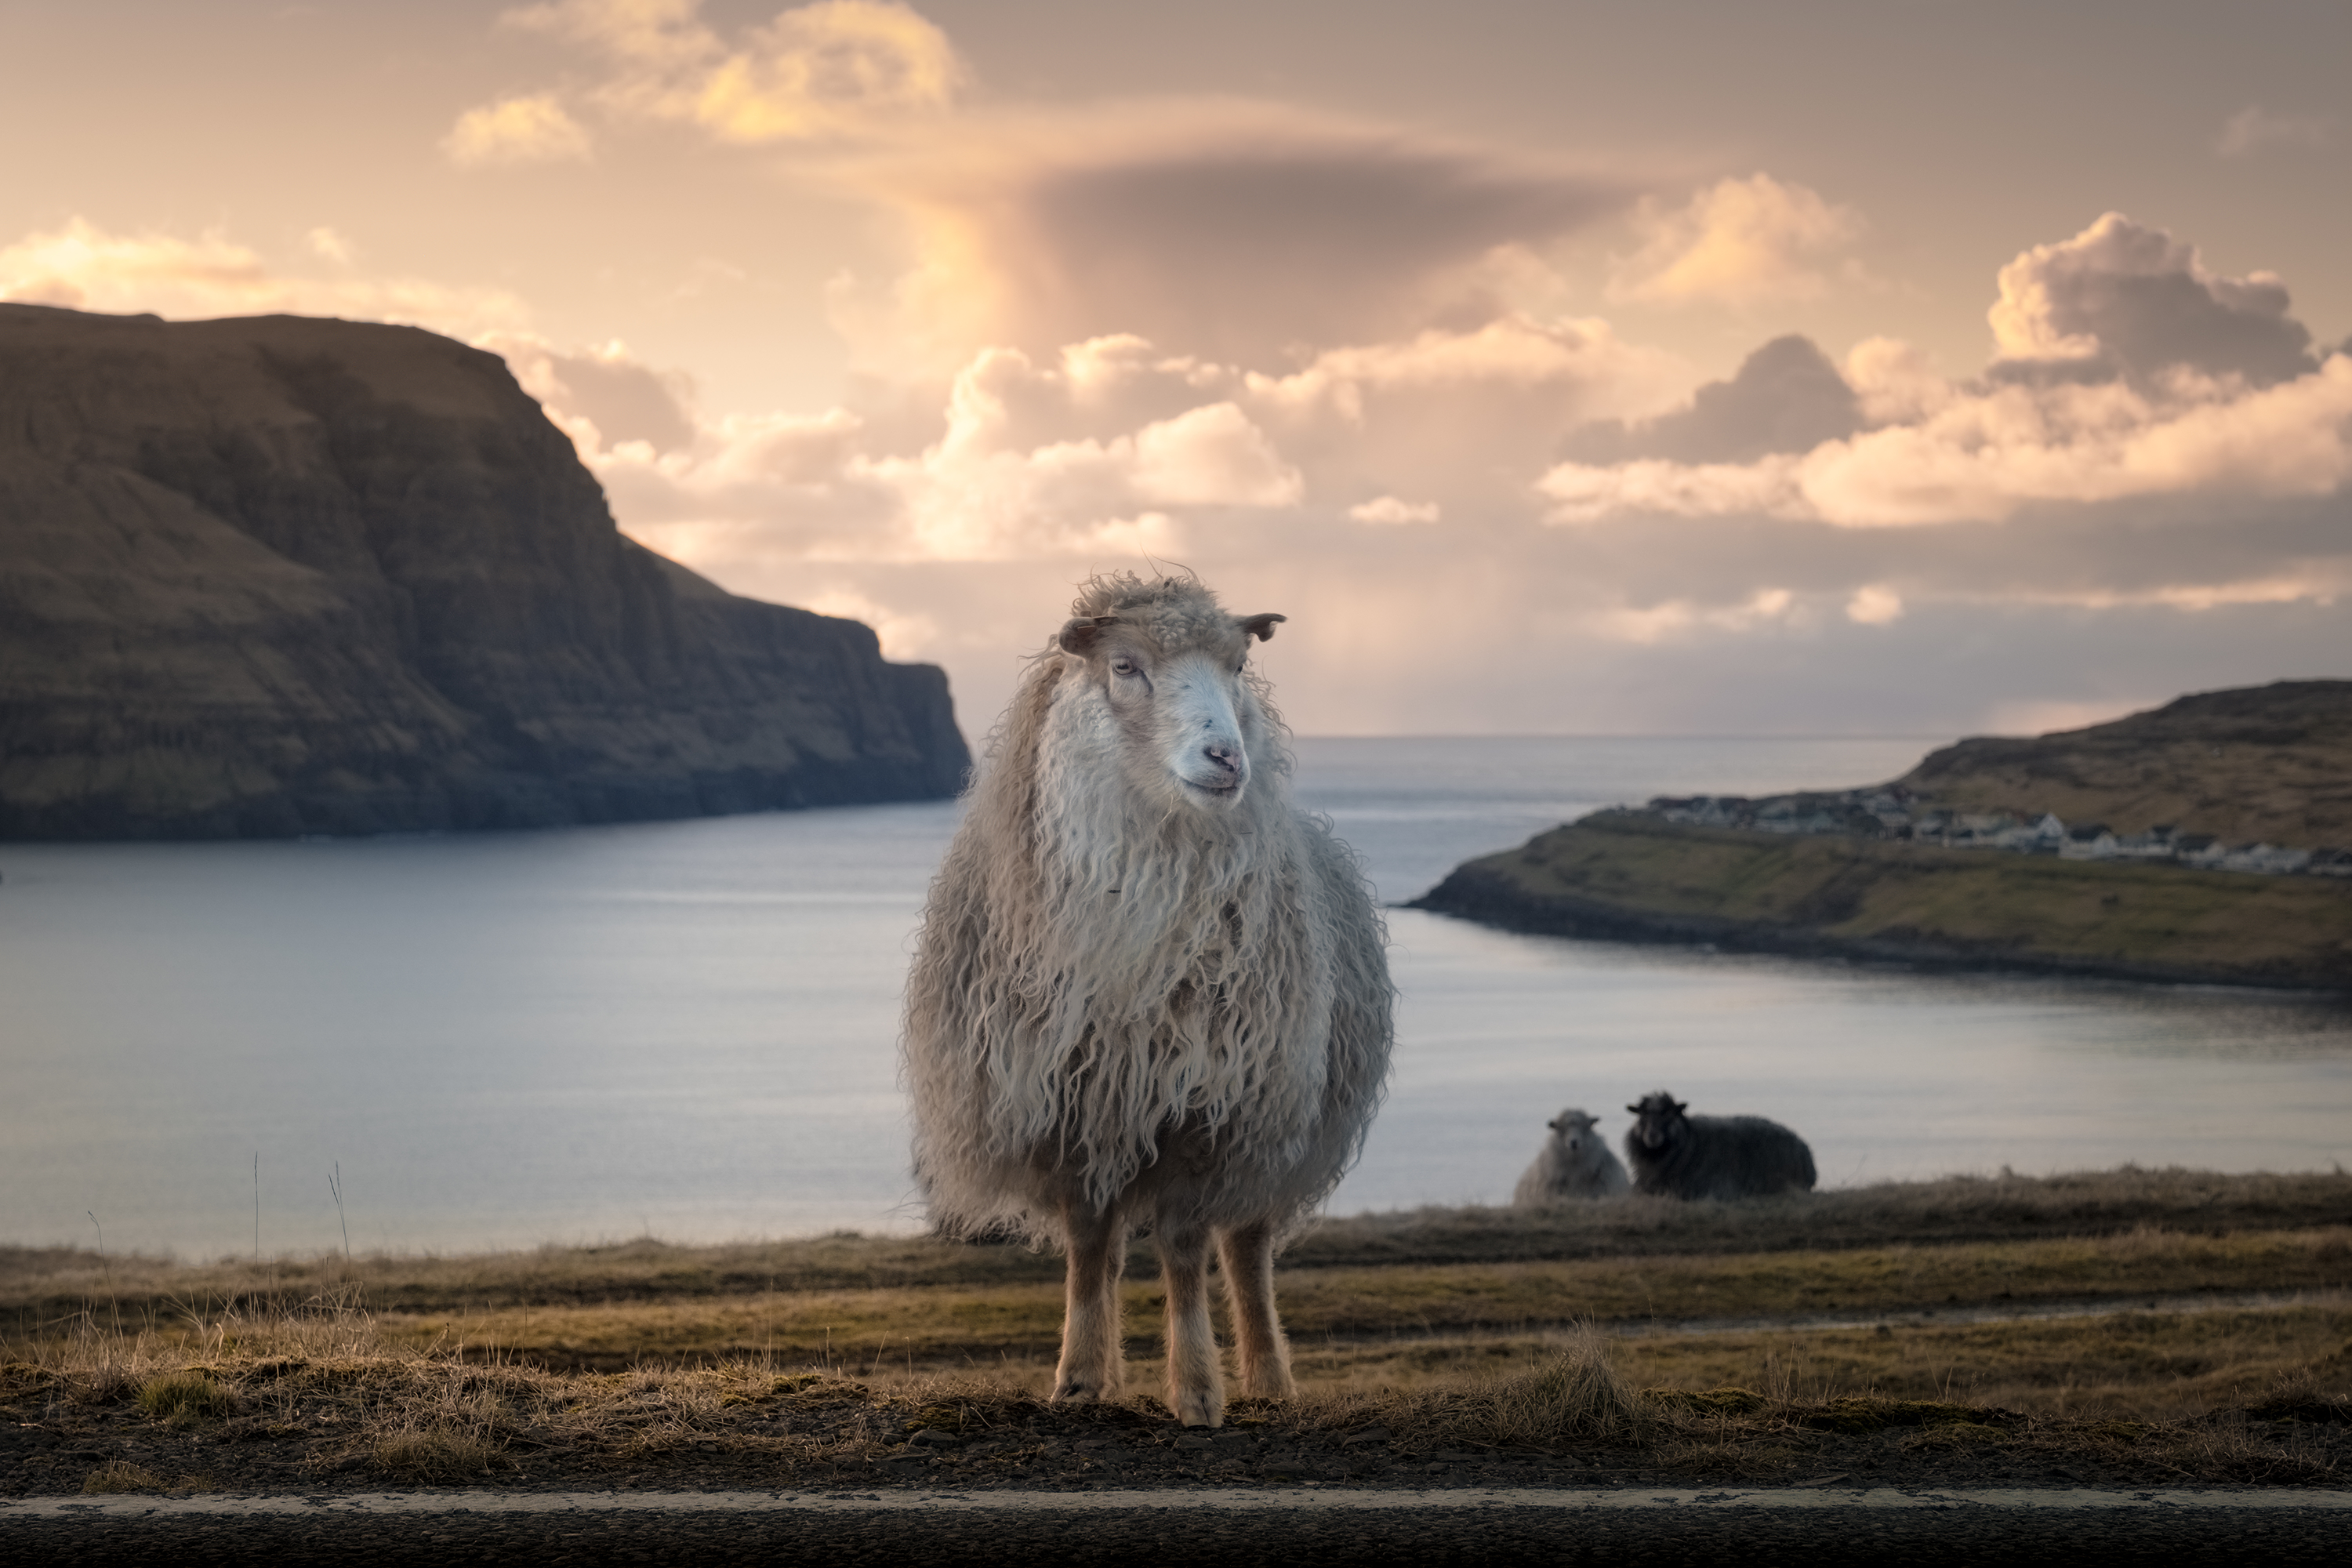 Shetland Sheep "The Good Shepherd"